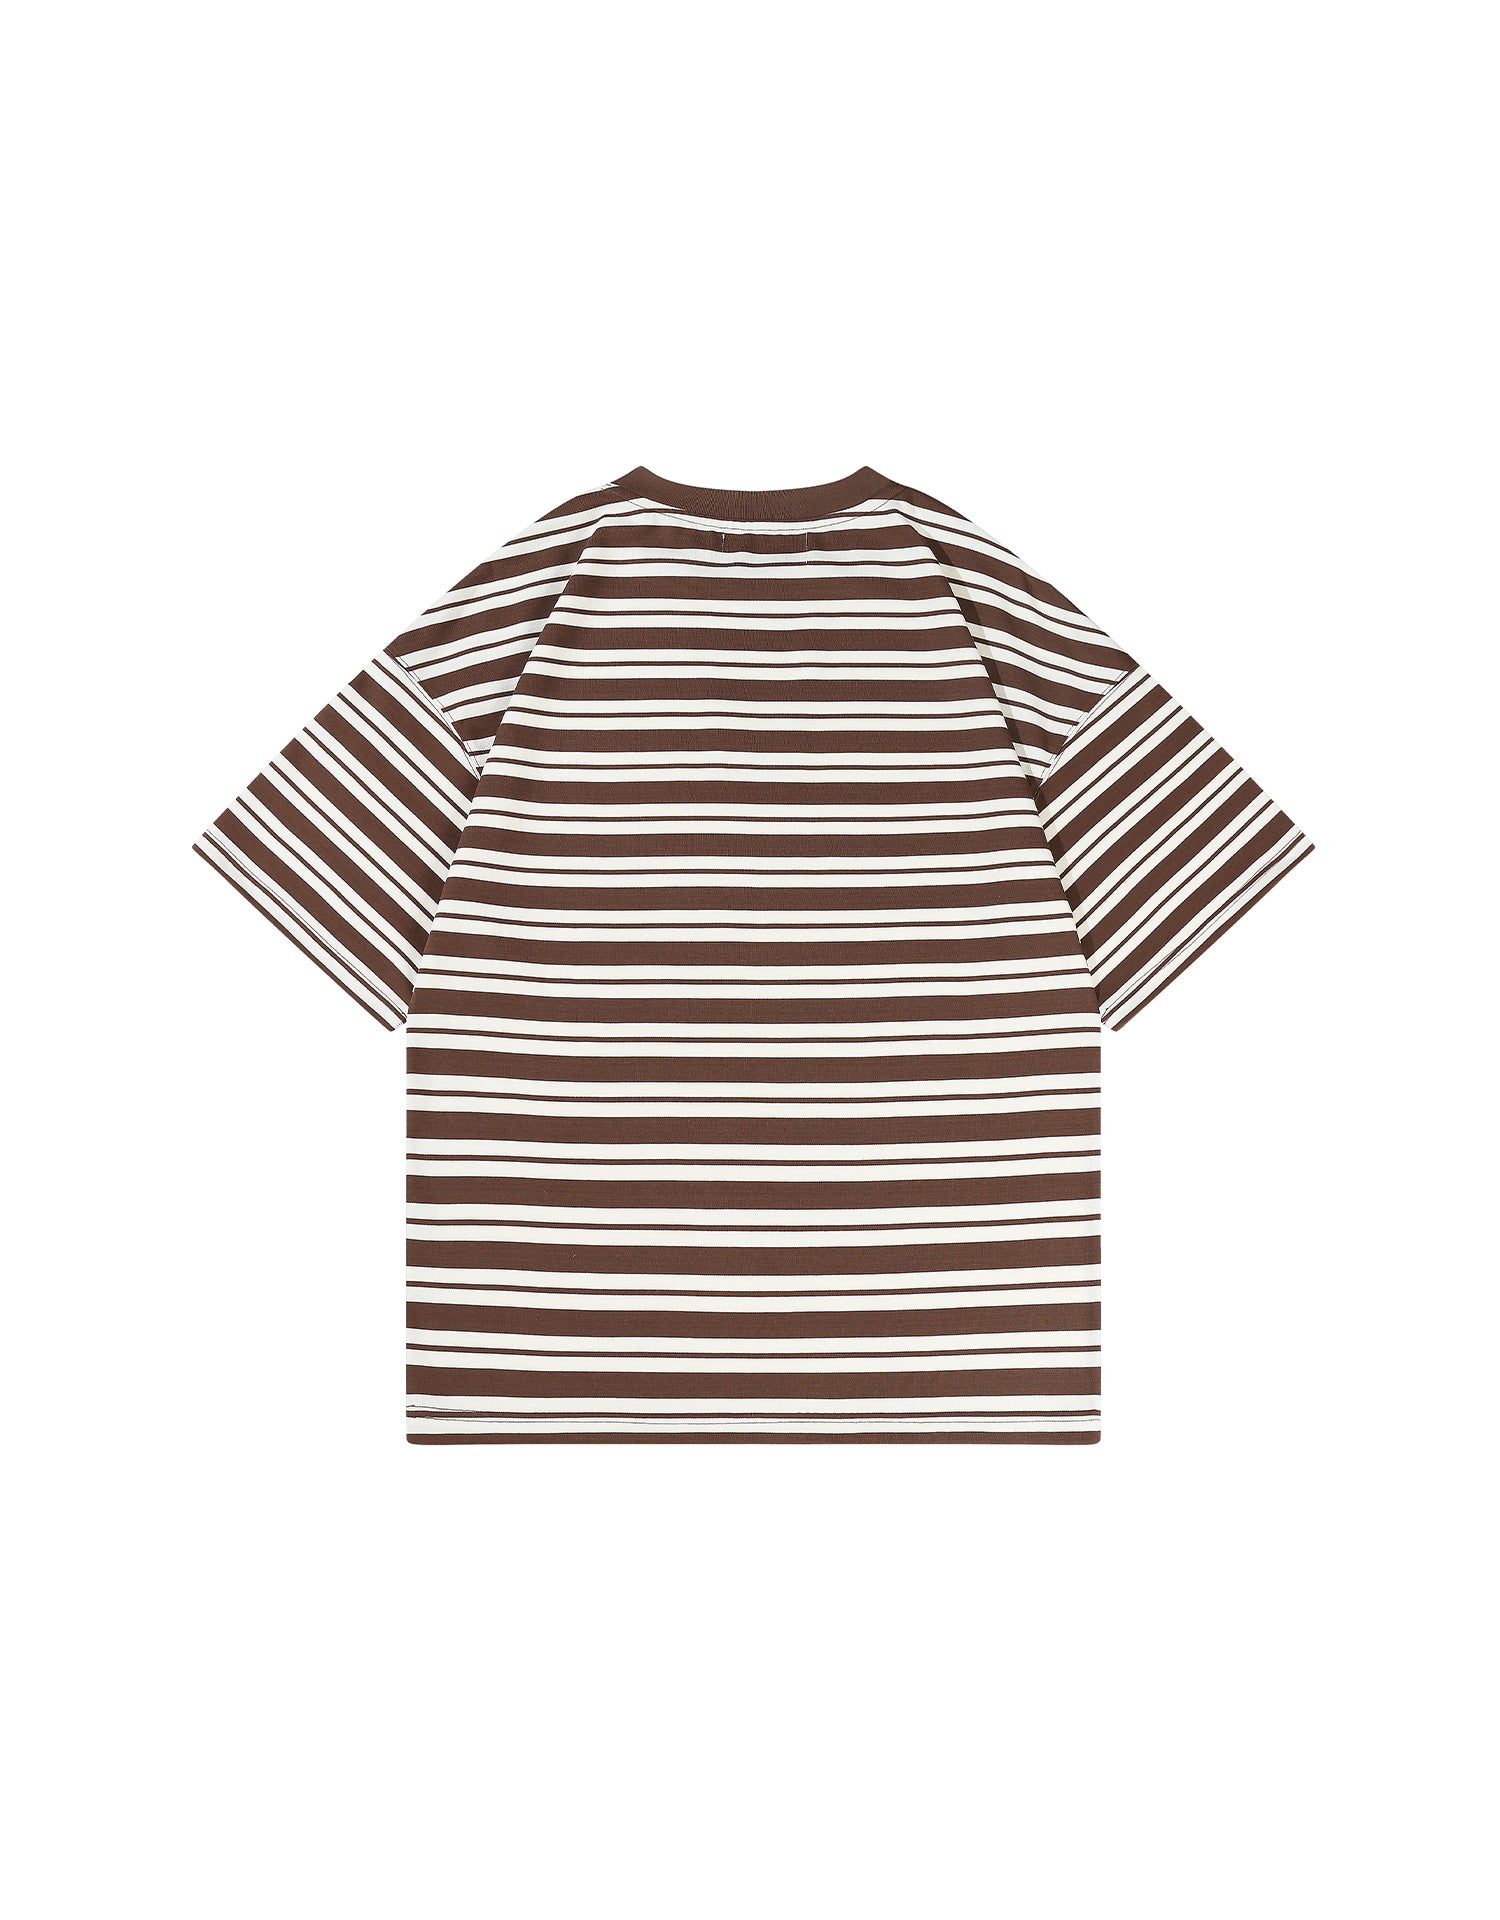 TopBasics Printed Striped T-Shirt